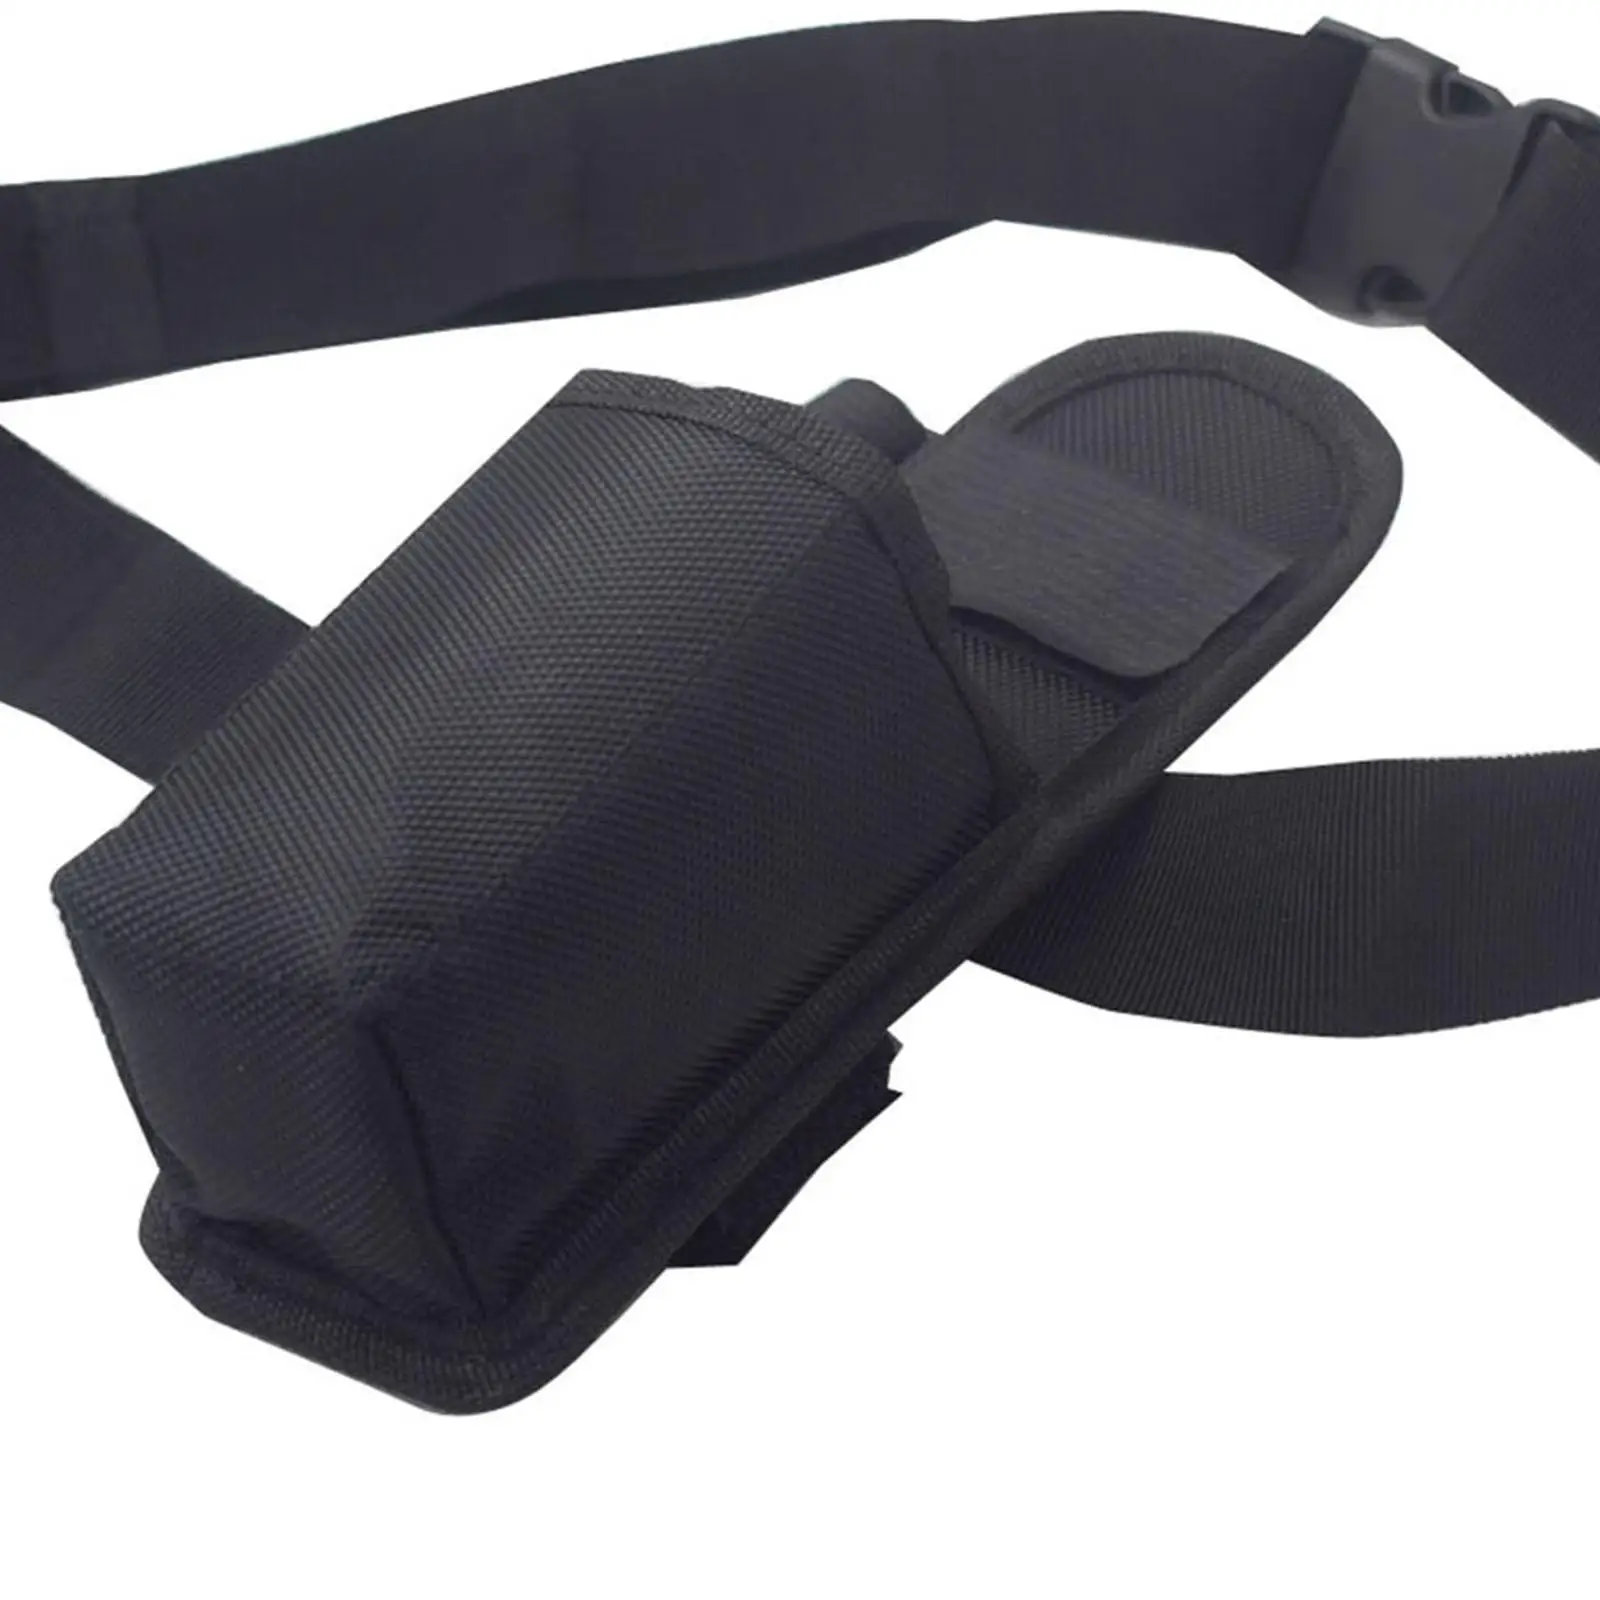 Waist Pack Umbrella Strap Bracket Mount Fixed Connector Belt Bag Fanny Pack for Trekking Backpack Use Hiking Sports Kids